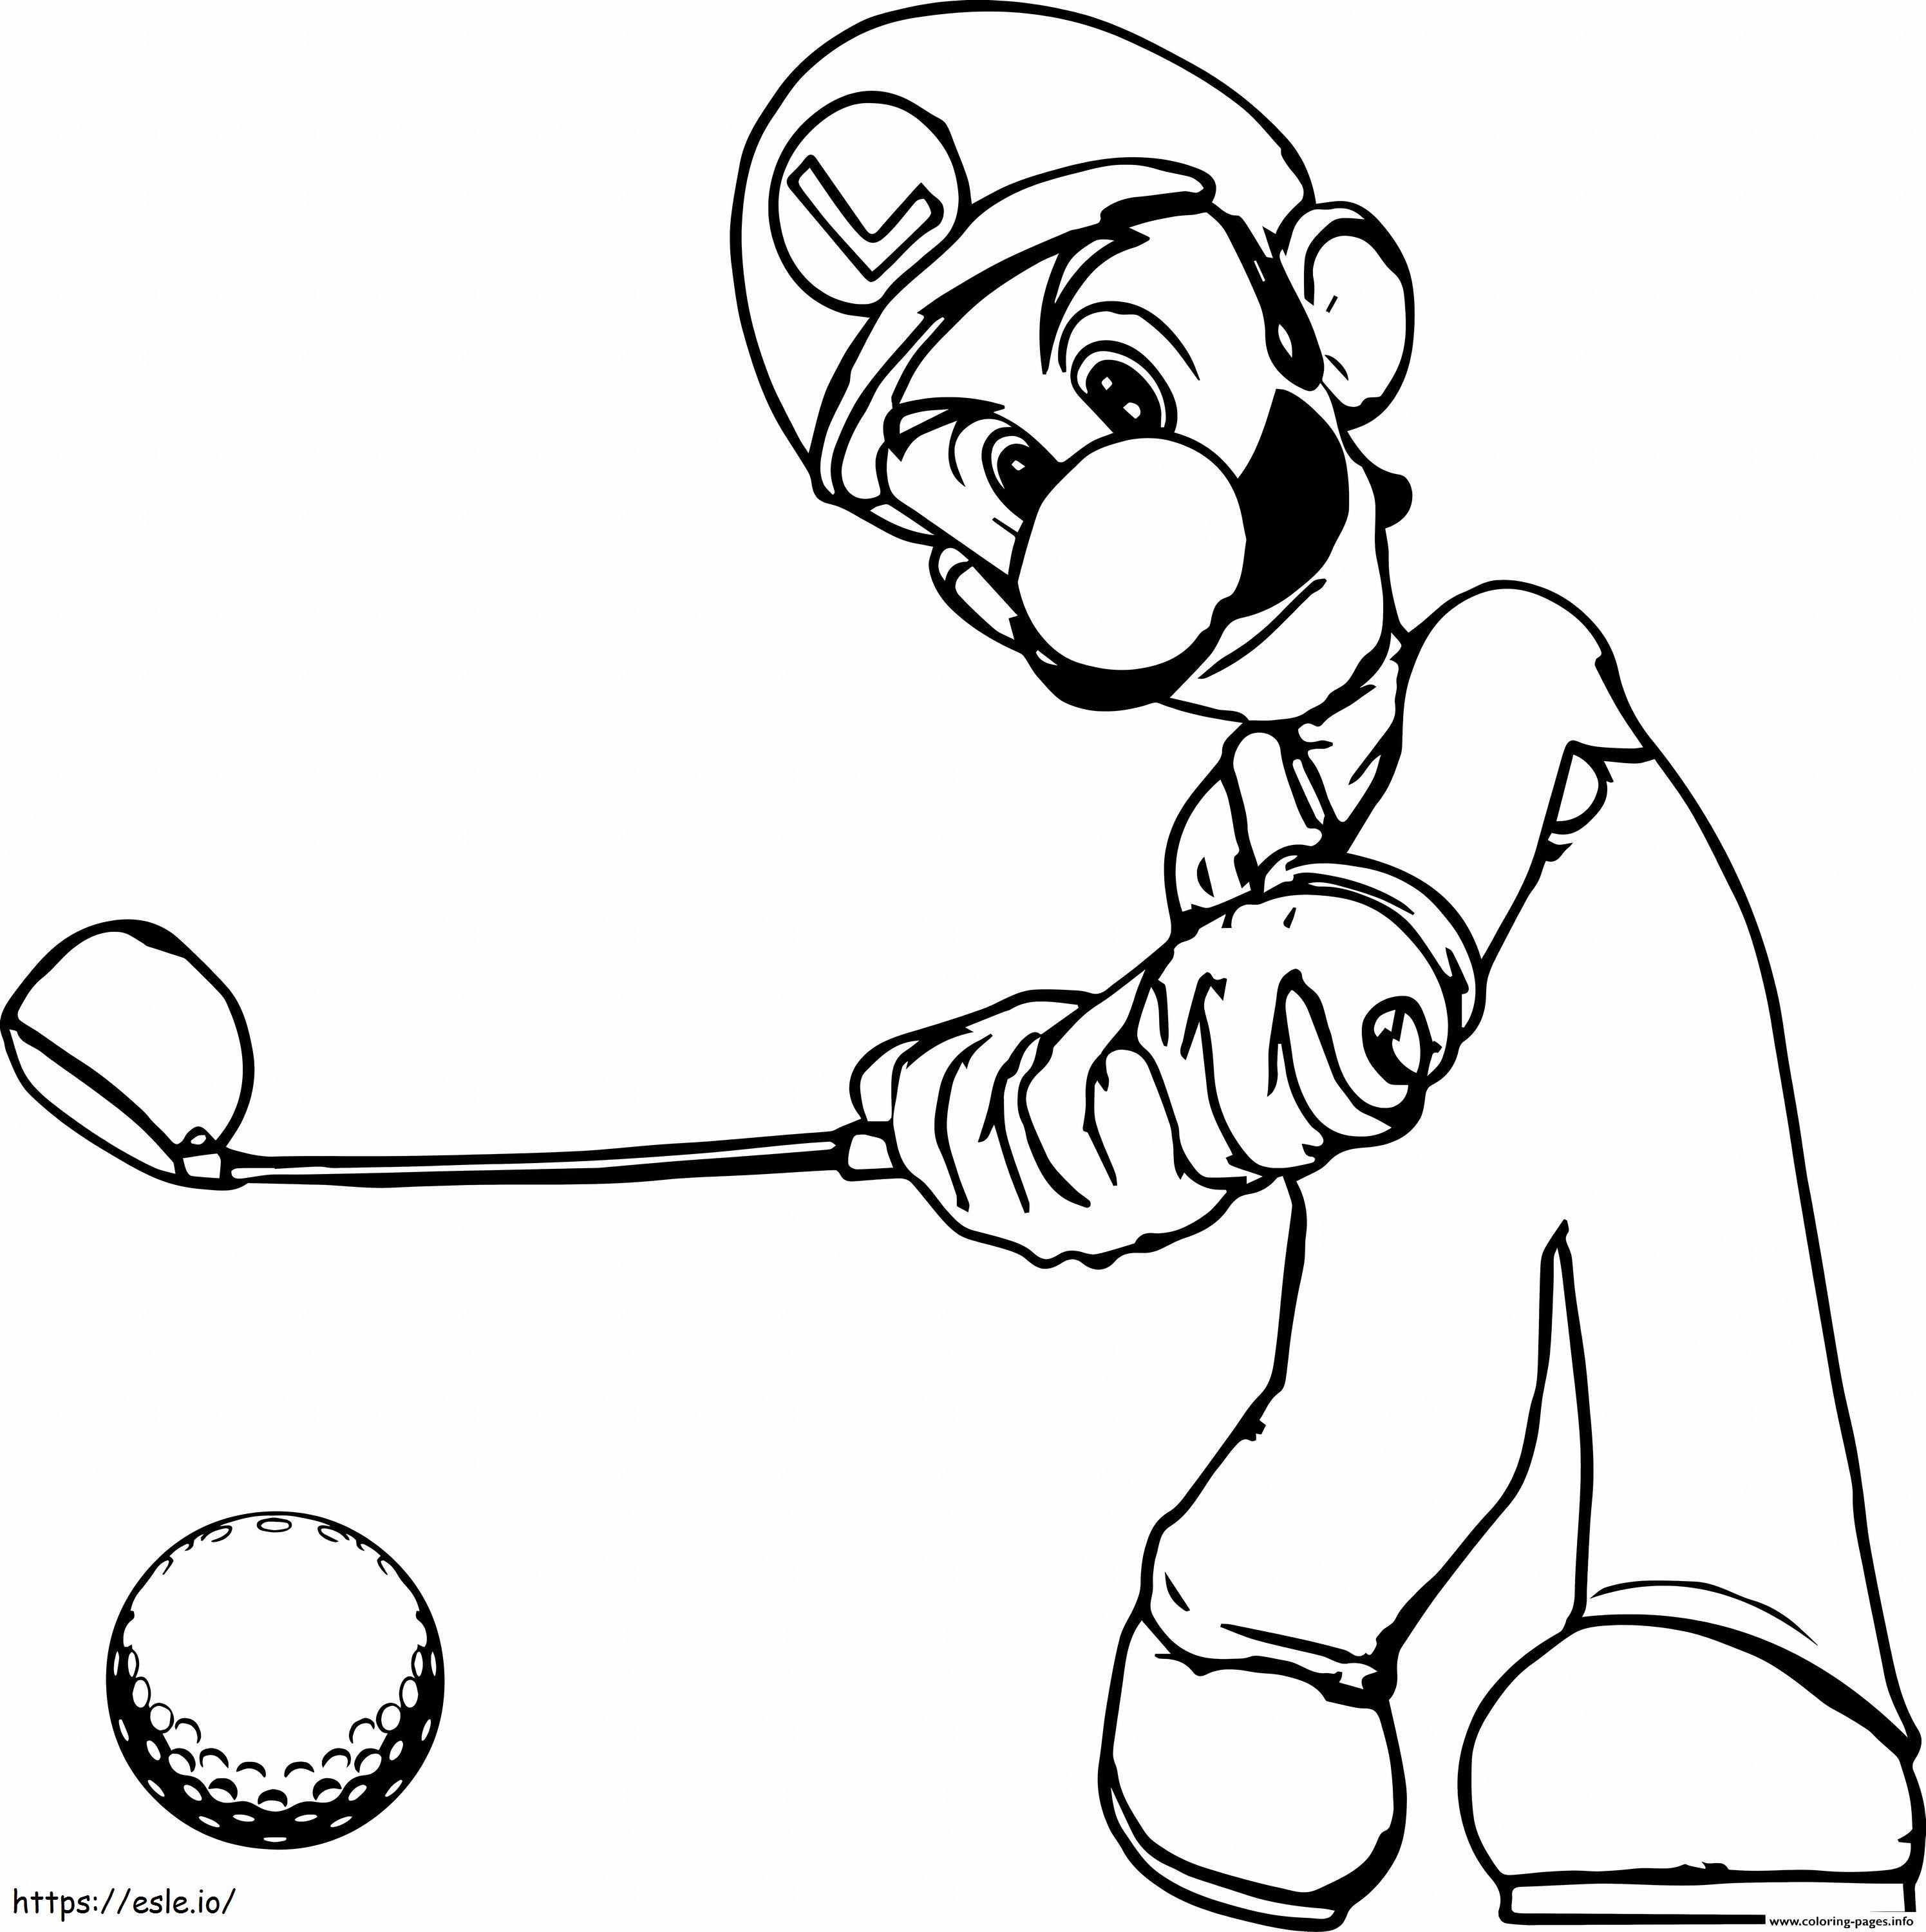 Luigi golfozik kifestő